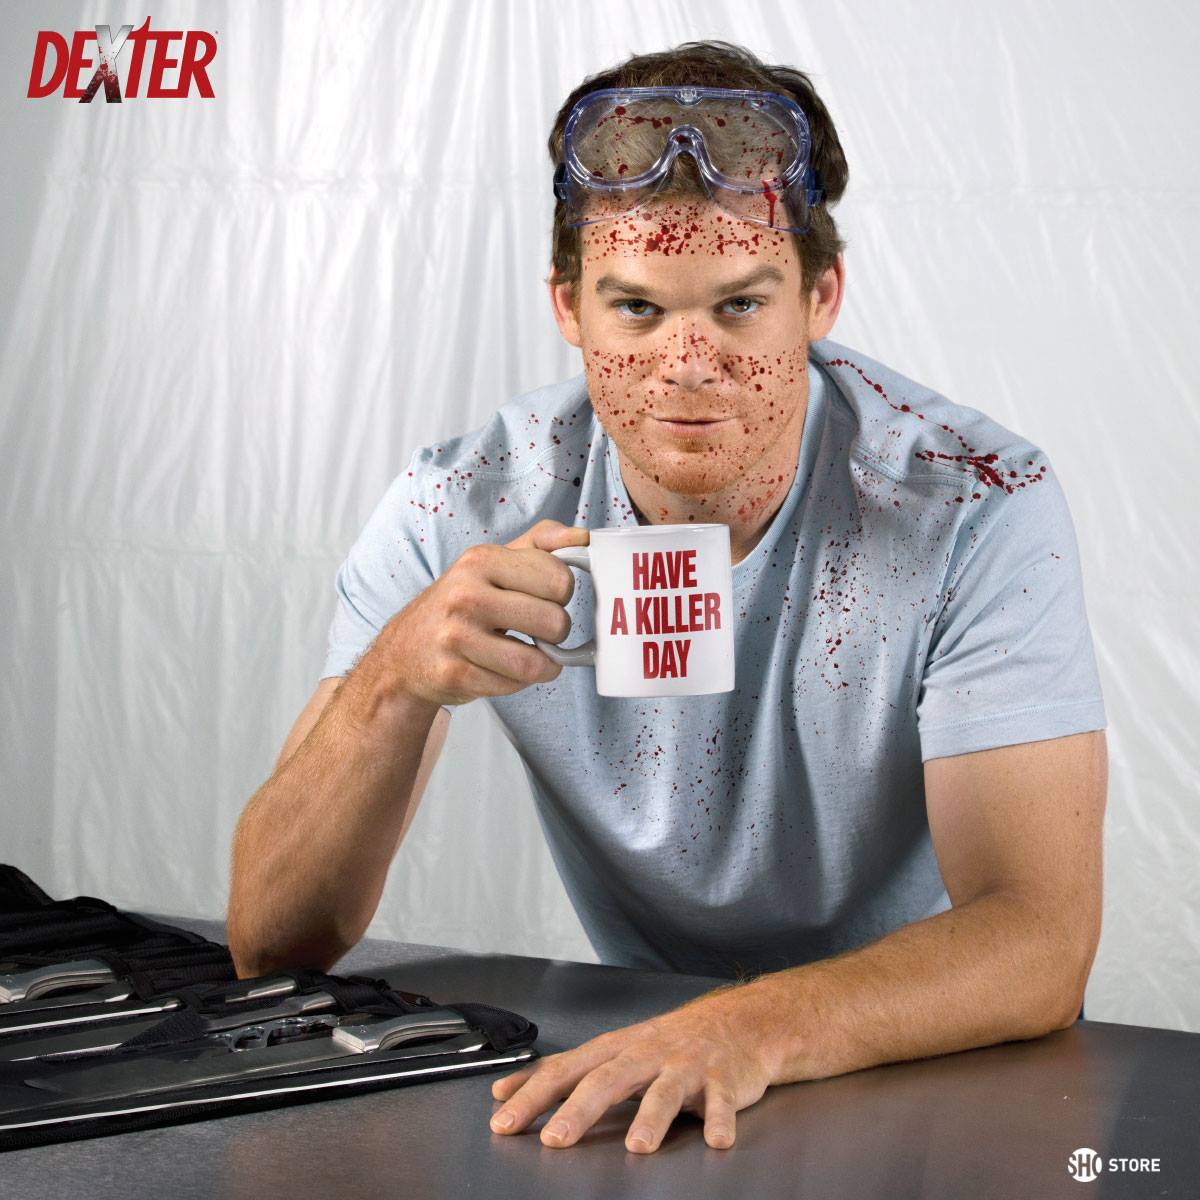 Foto de ShowTime da a conocer un nuevo teaser de la novena temporada de Dexter